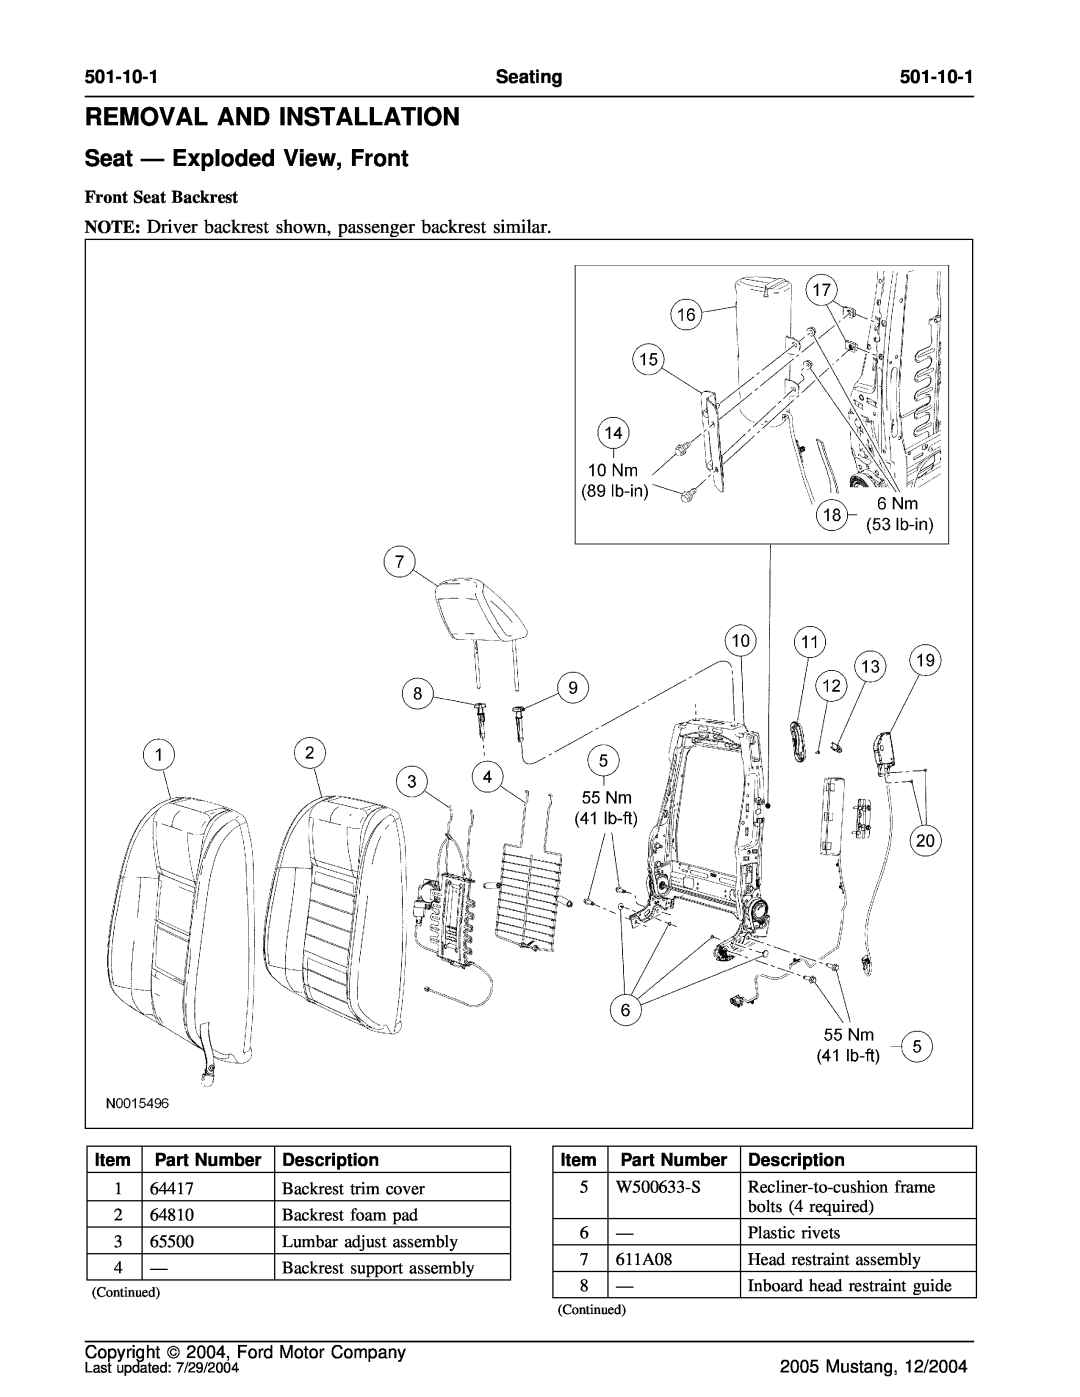 Ford 501-10-1 manual NOTE Driver backrest shown, passenger backrest similar, Seating, Front Seat Backrest, Part Number 